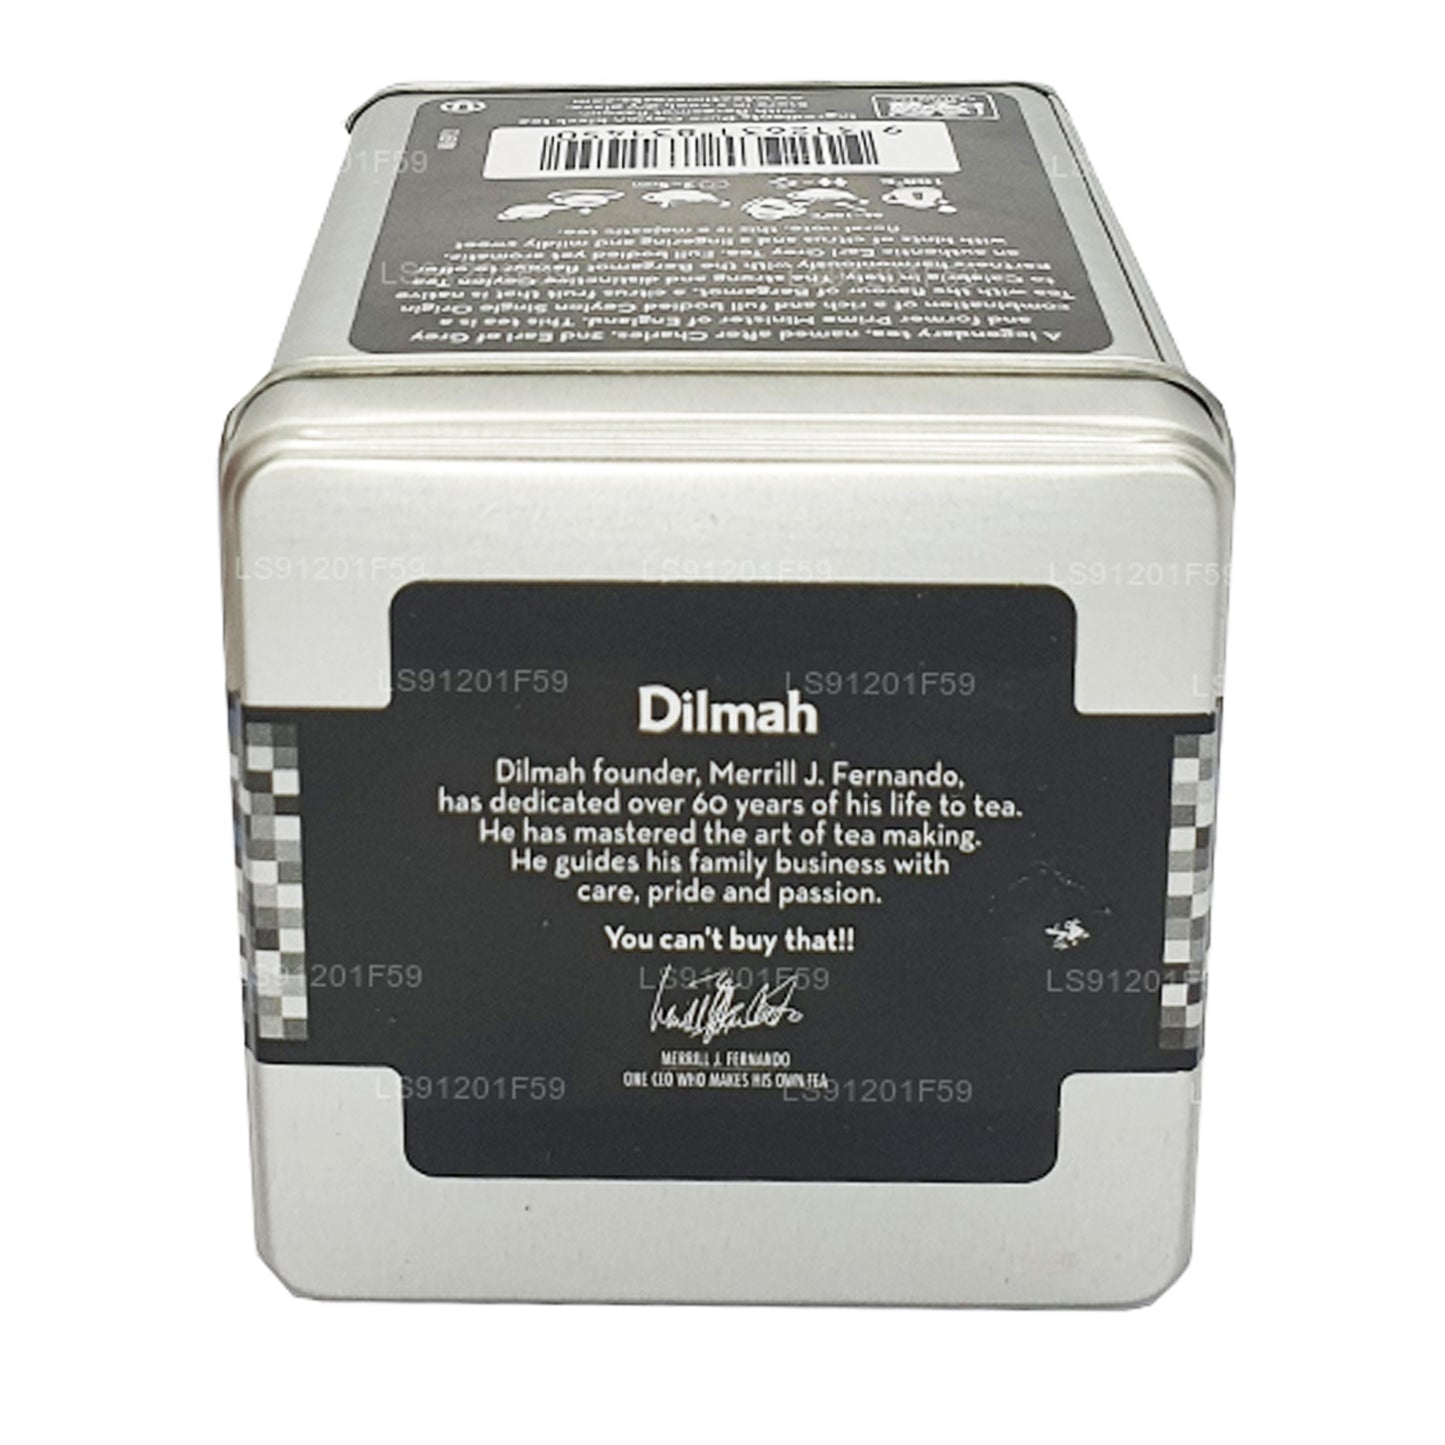 Dilmah T-series The Original Earl Grey Luźna Herbata Liściasta (100g)